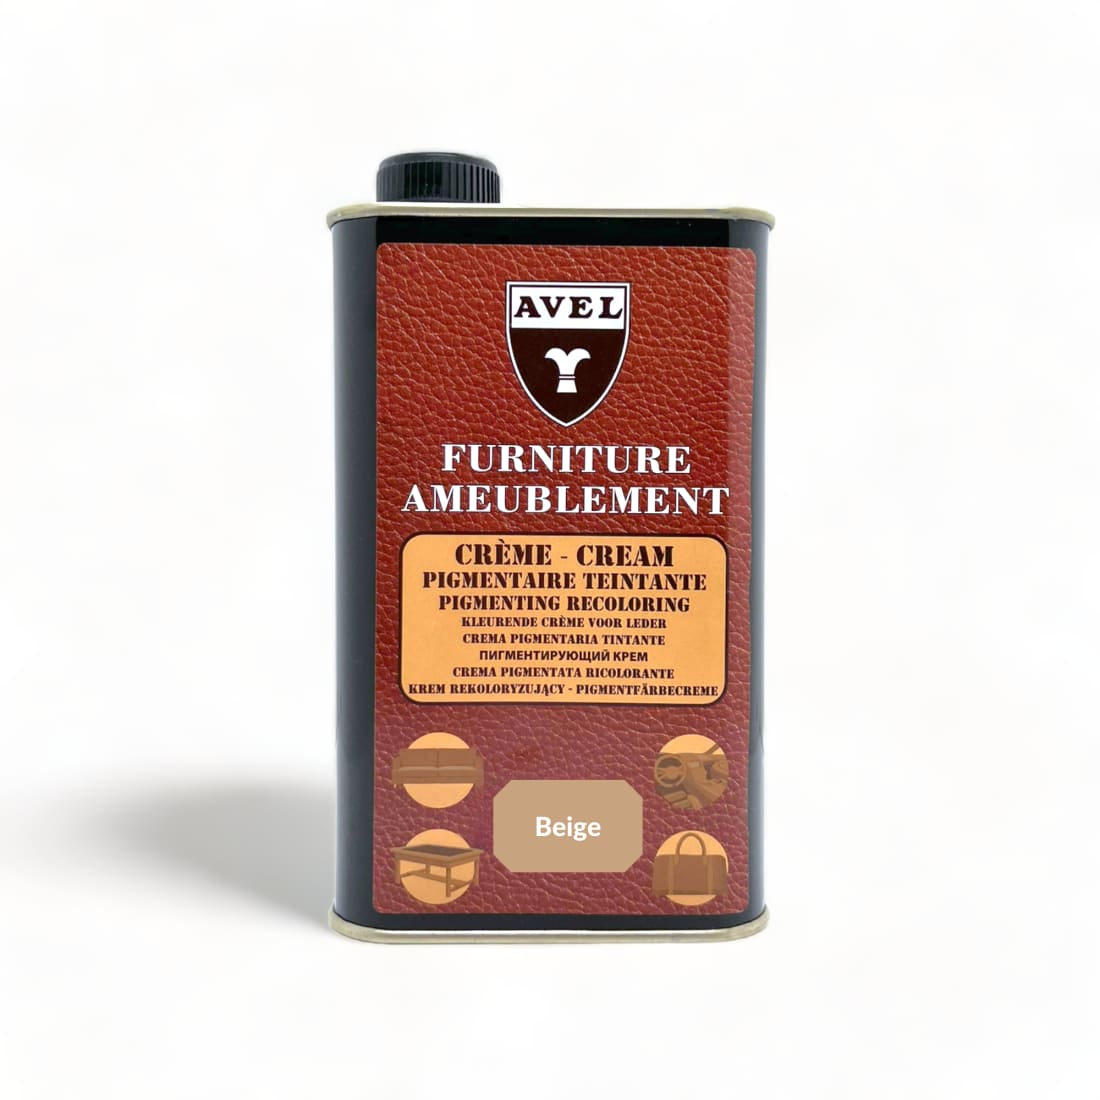 Crème Pigmentaire Teintante Beige - Avel - 375 ml -